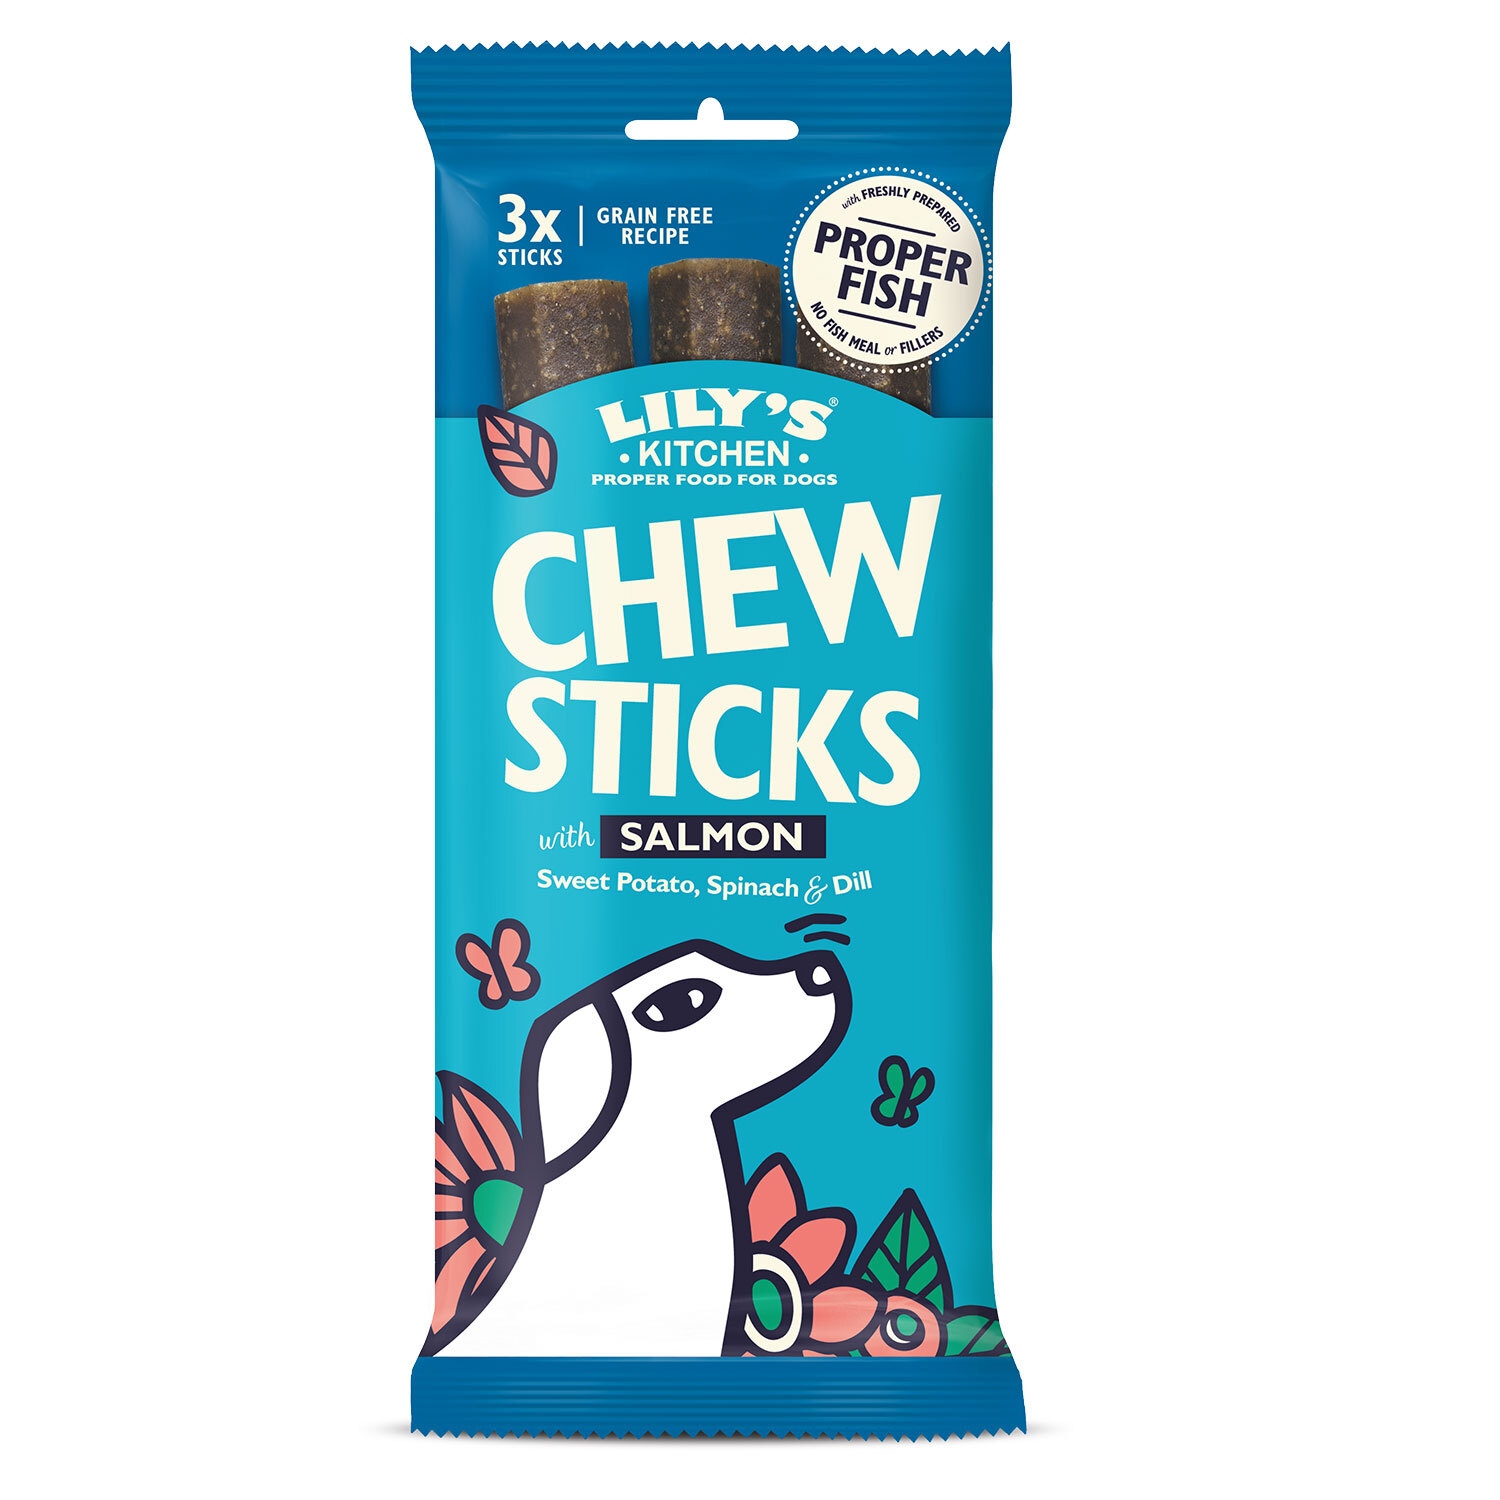 Lilys Kitchen Chew Sticks - Salmon Image